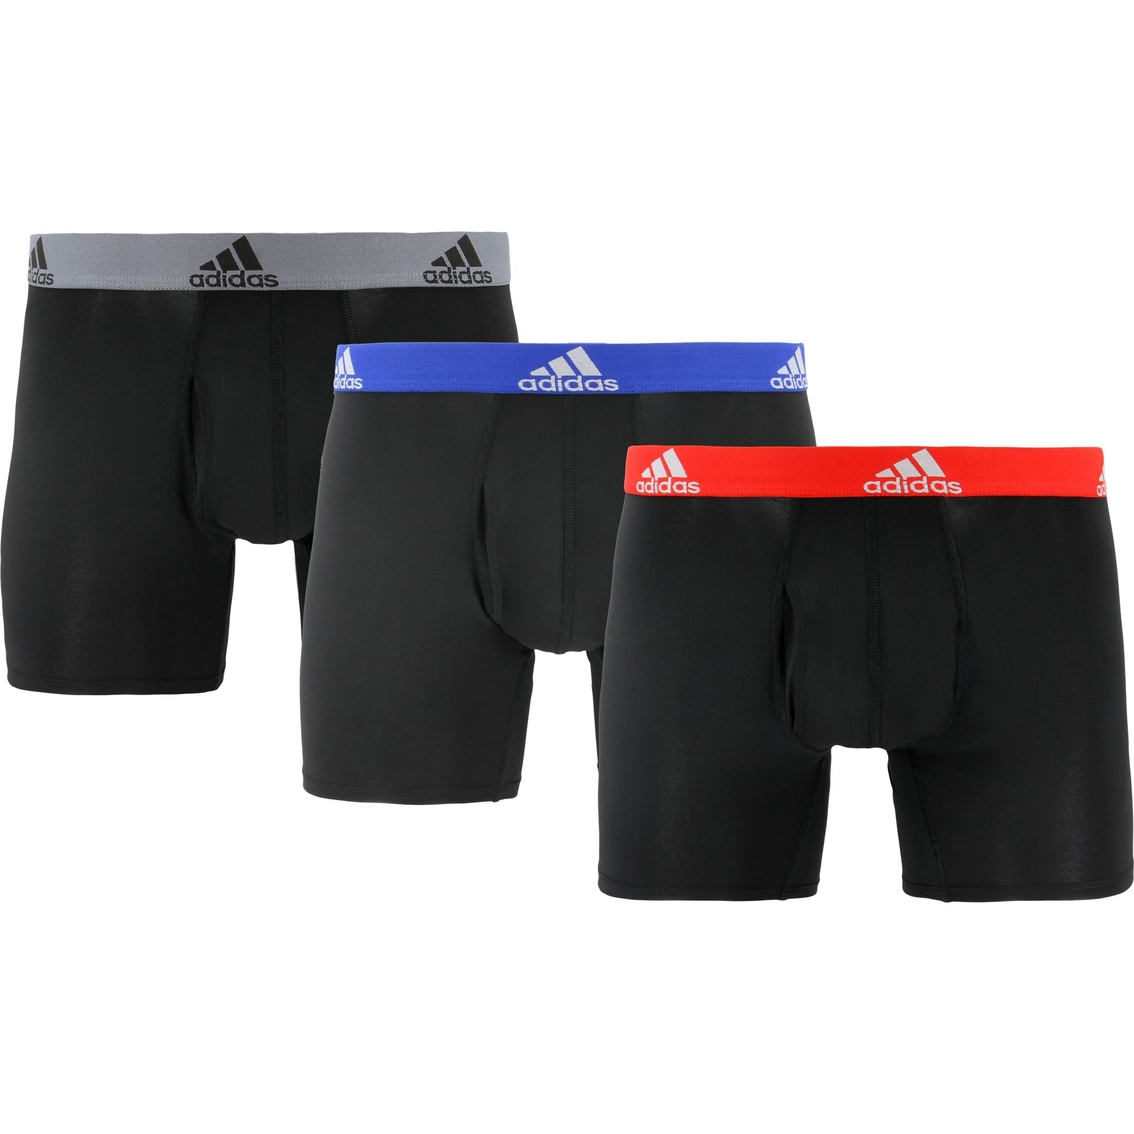 Adidas Climalite 3 Pk. Boxer Brief | Underwear | Clothing & Accessories ...